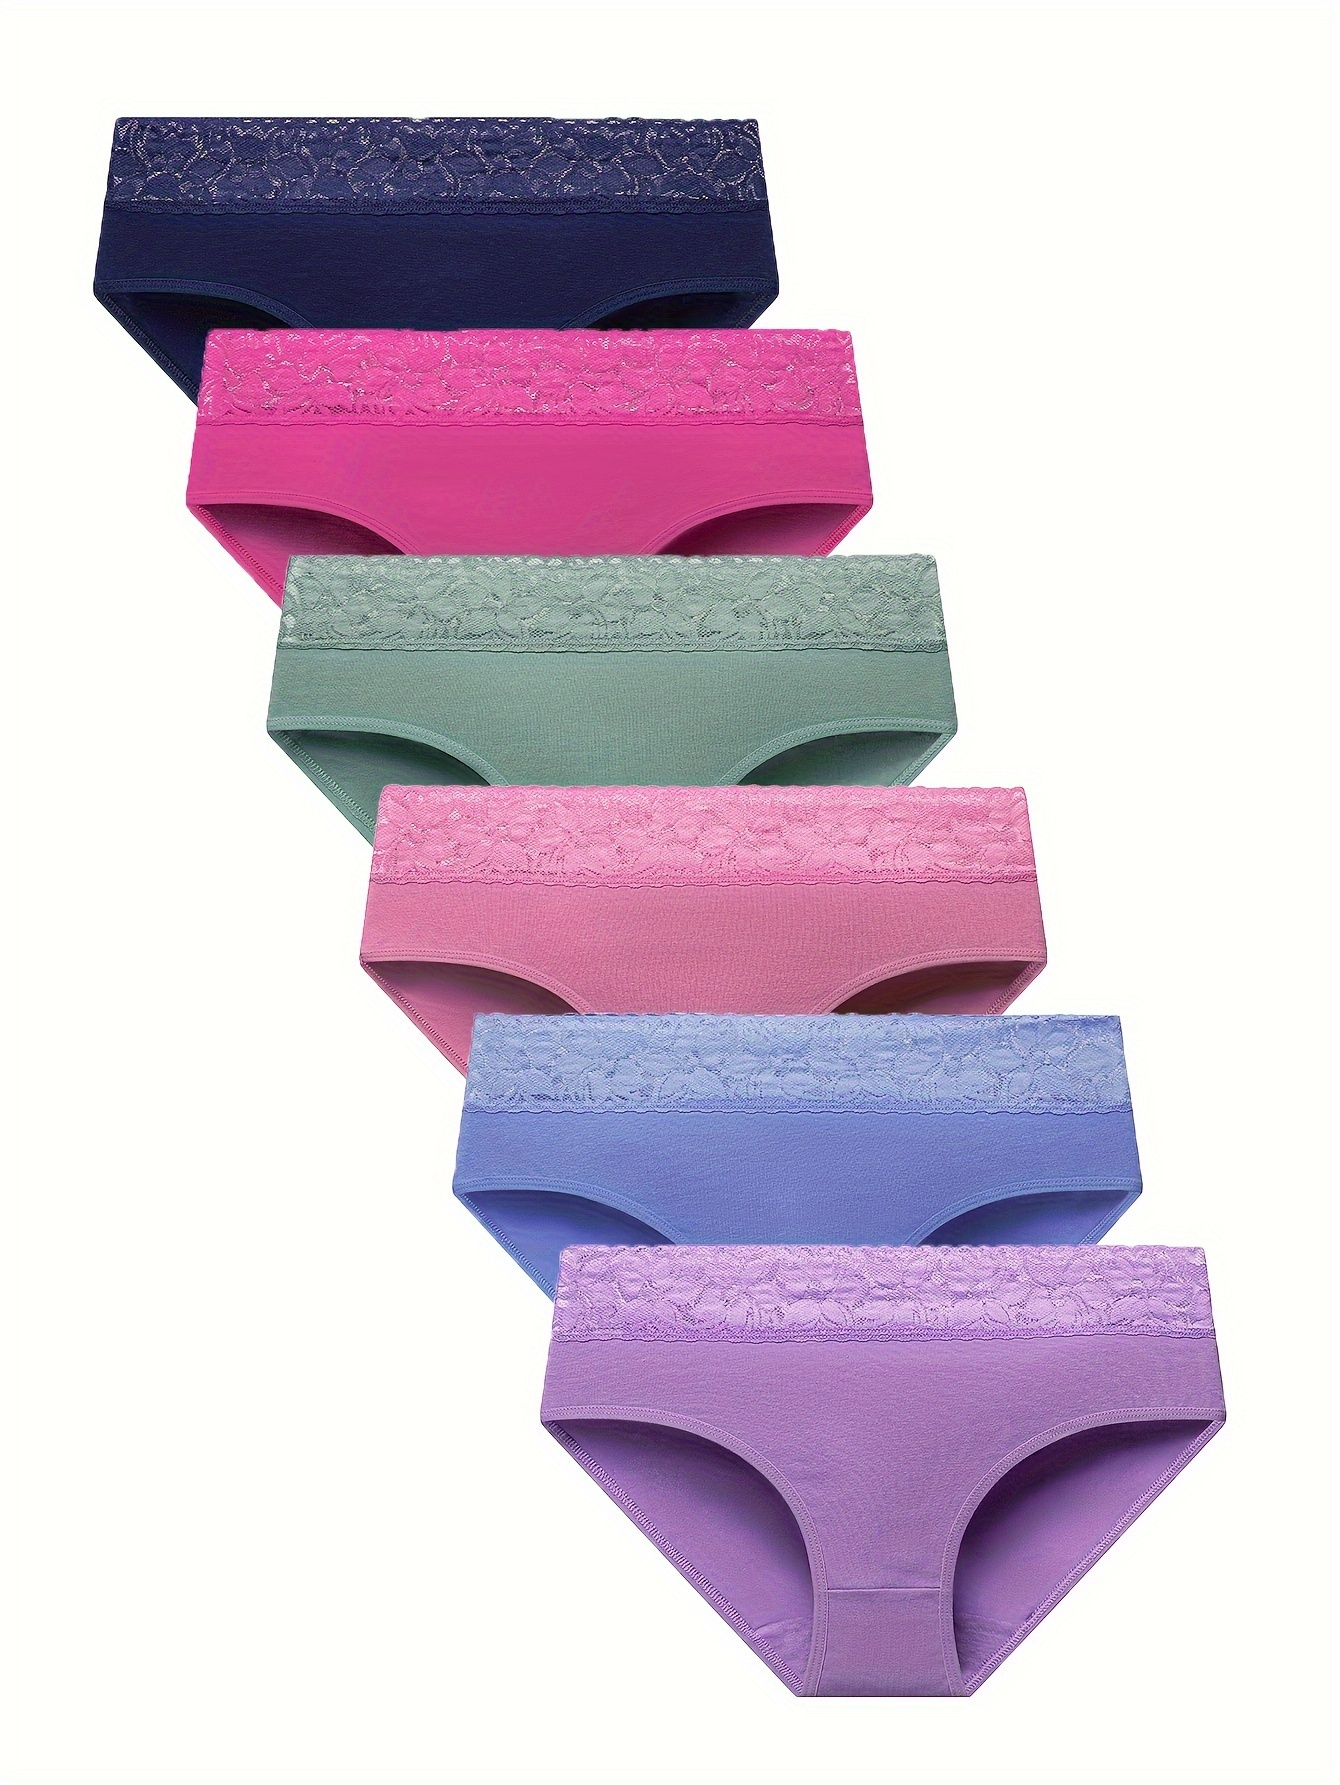 Plus Size Women's Cotton Spandex Lace Detail Brief 2-Pack by